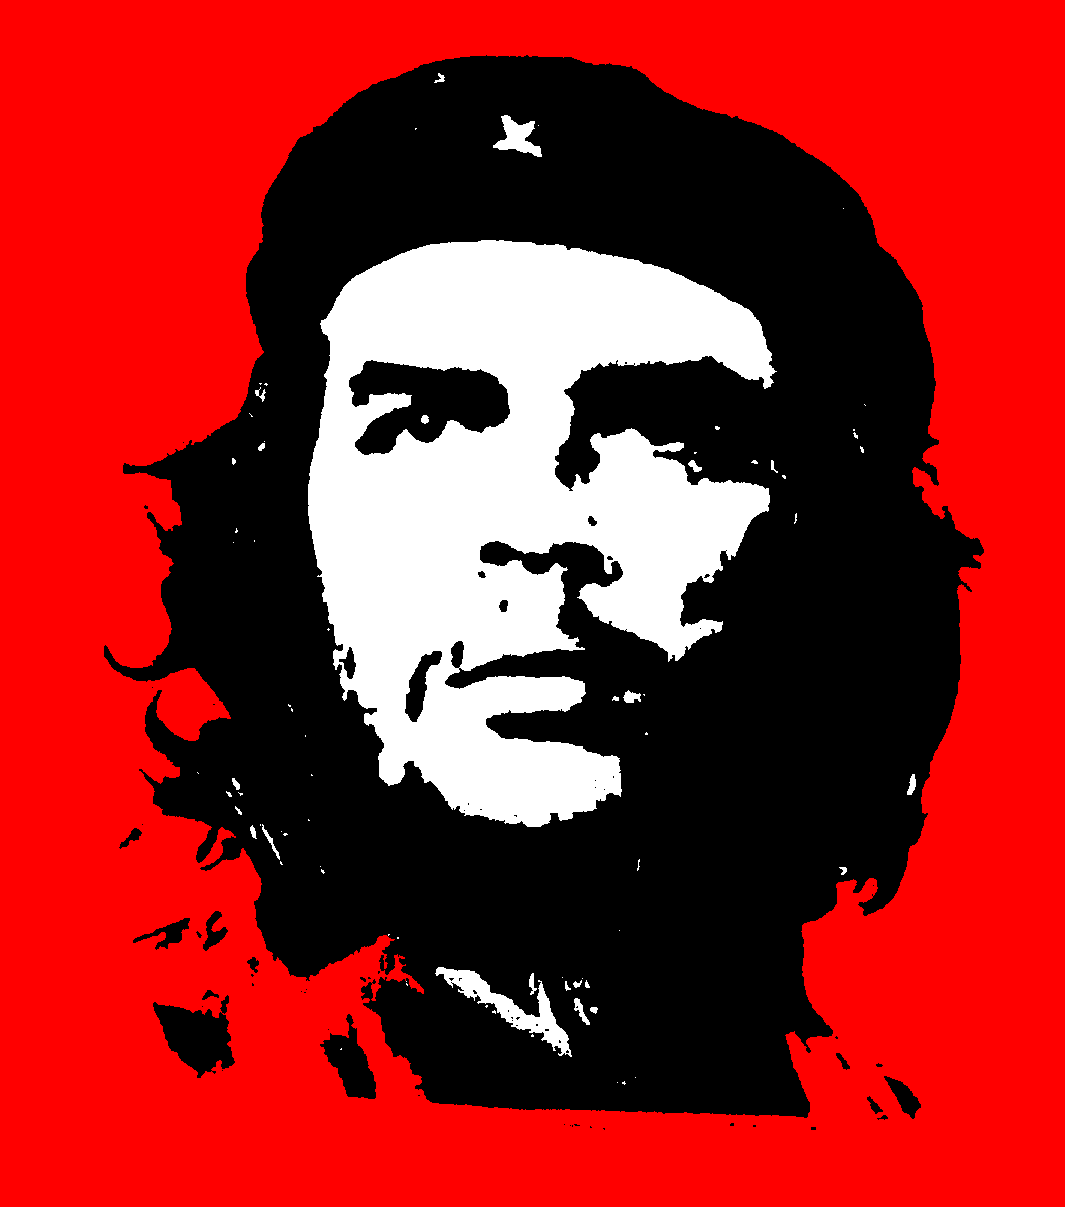 Iconic Che Guevara Image